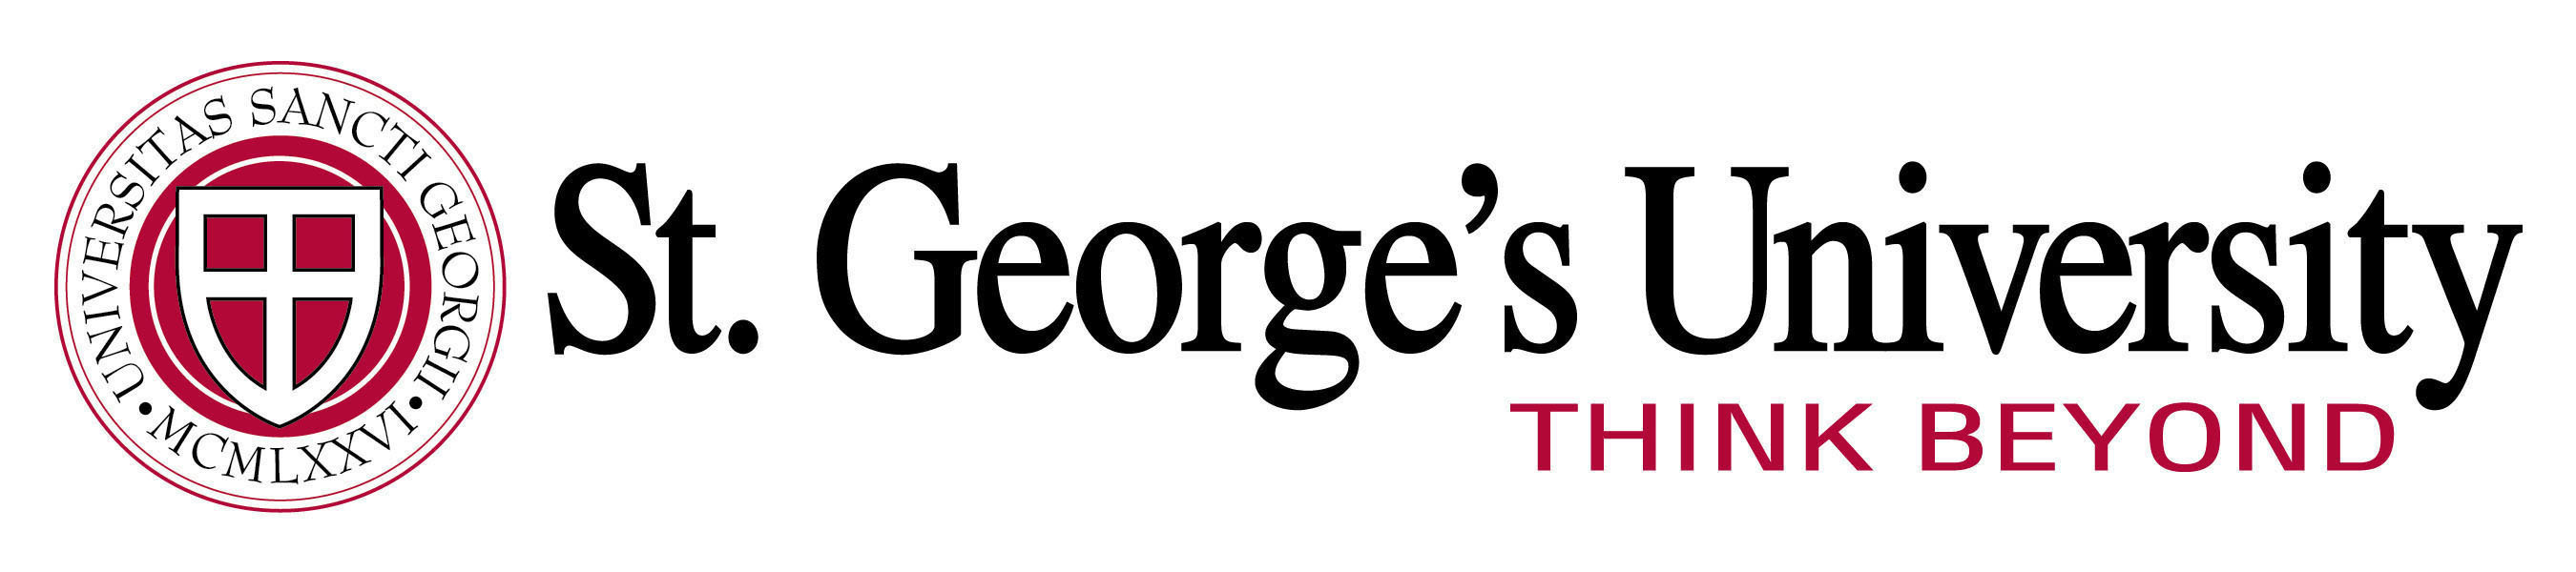 St. George's University (PRNewsFoto/St. George's University)